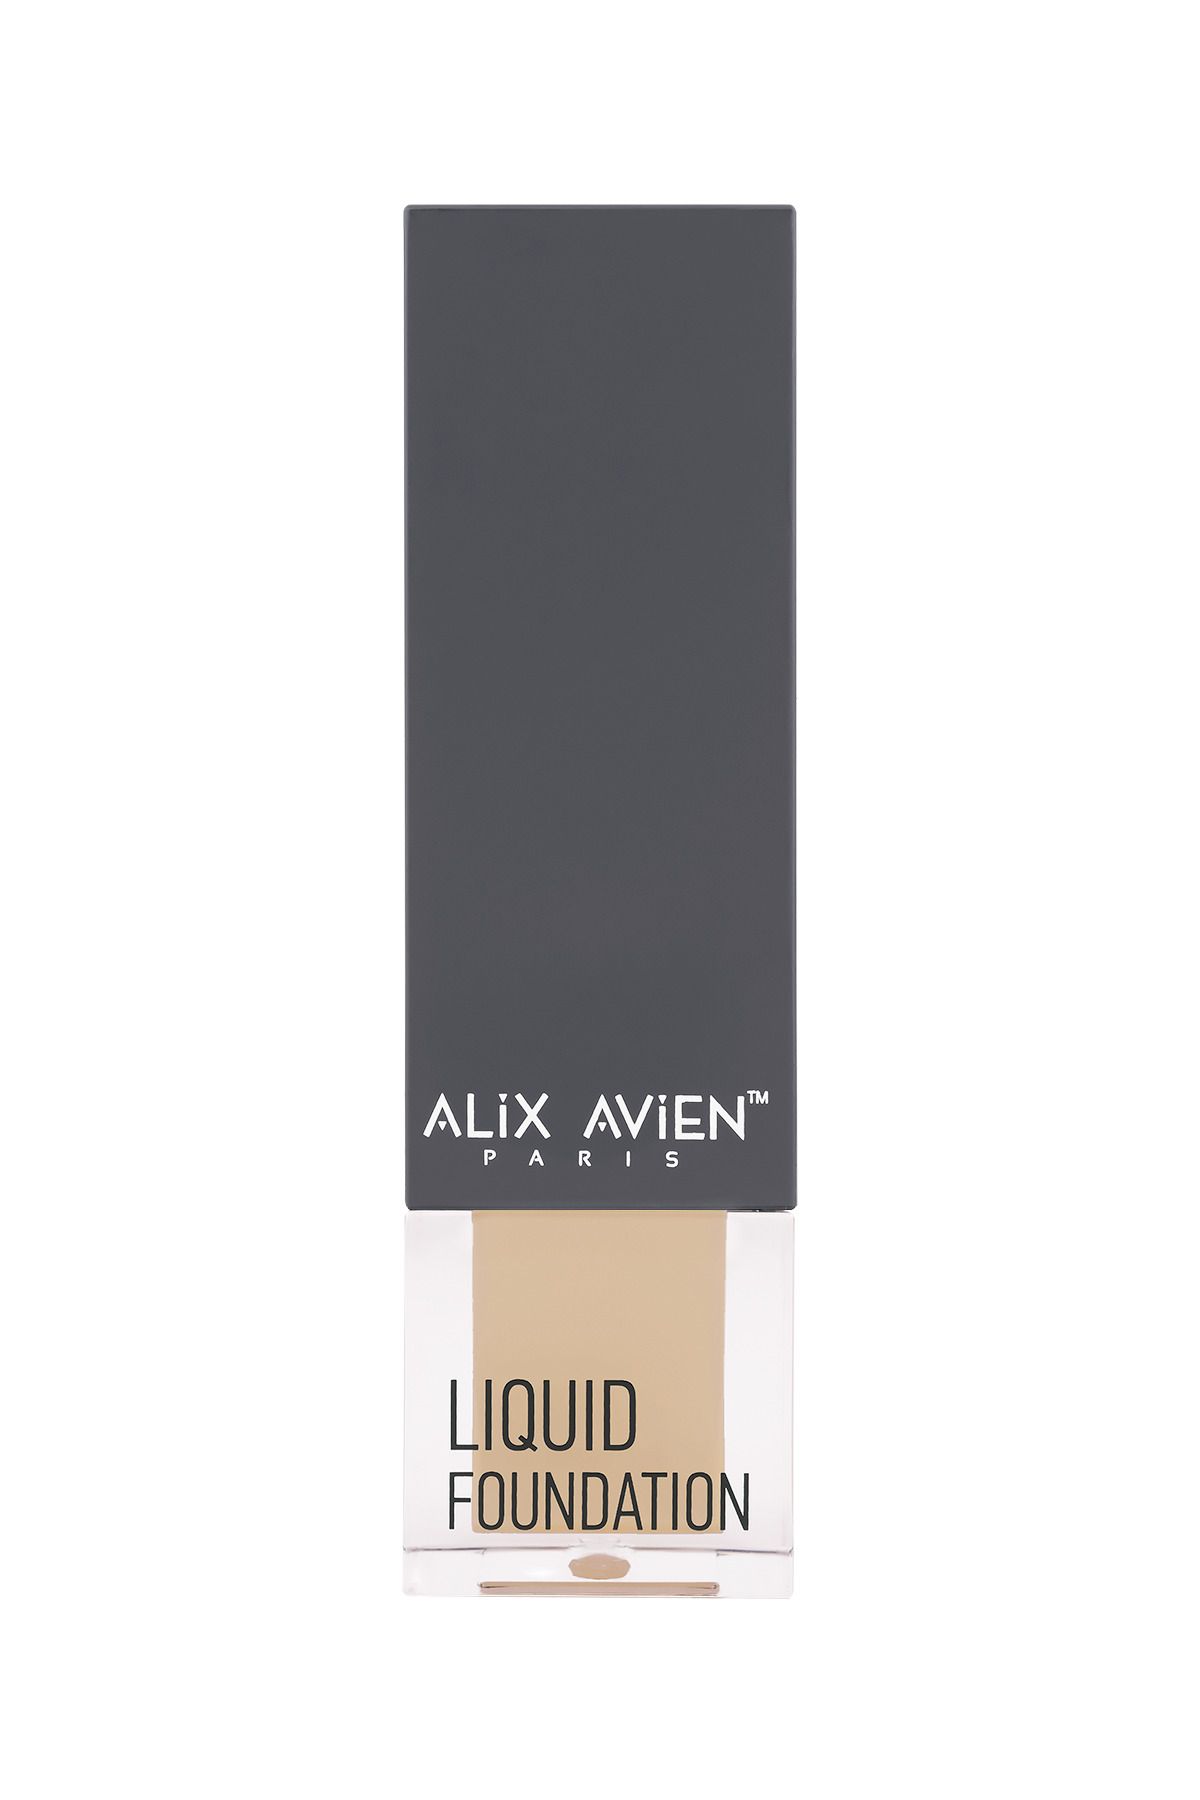 Alix Avien پودر مایع باف ۳۰۴ باف پایه مایع آرایش صورت تأثیر طبیعی روشن کننده ساختار کرمی SPF ۳۵